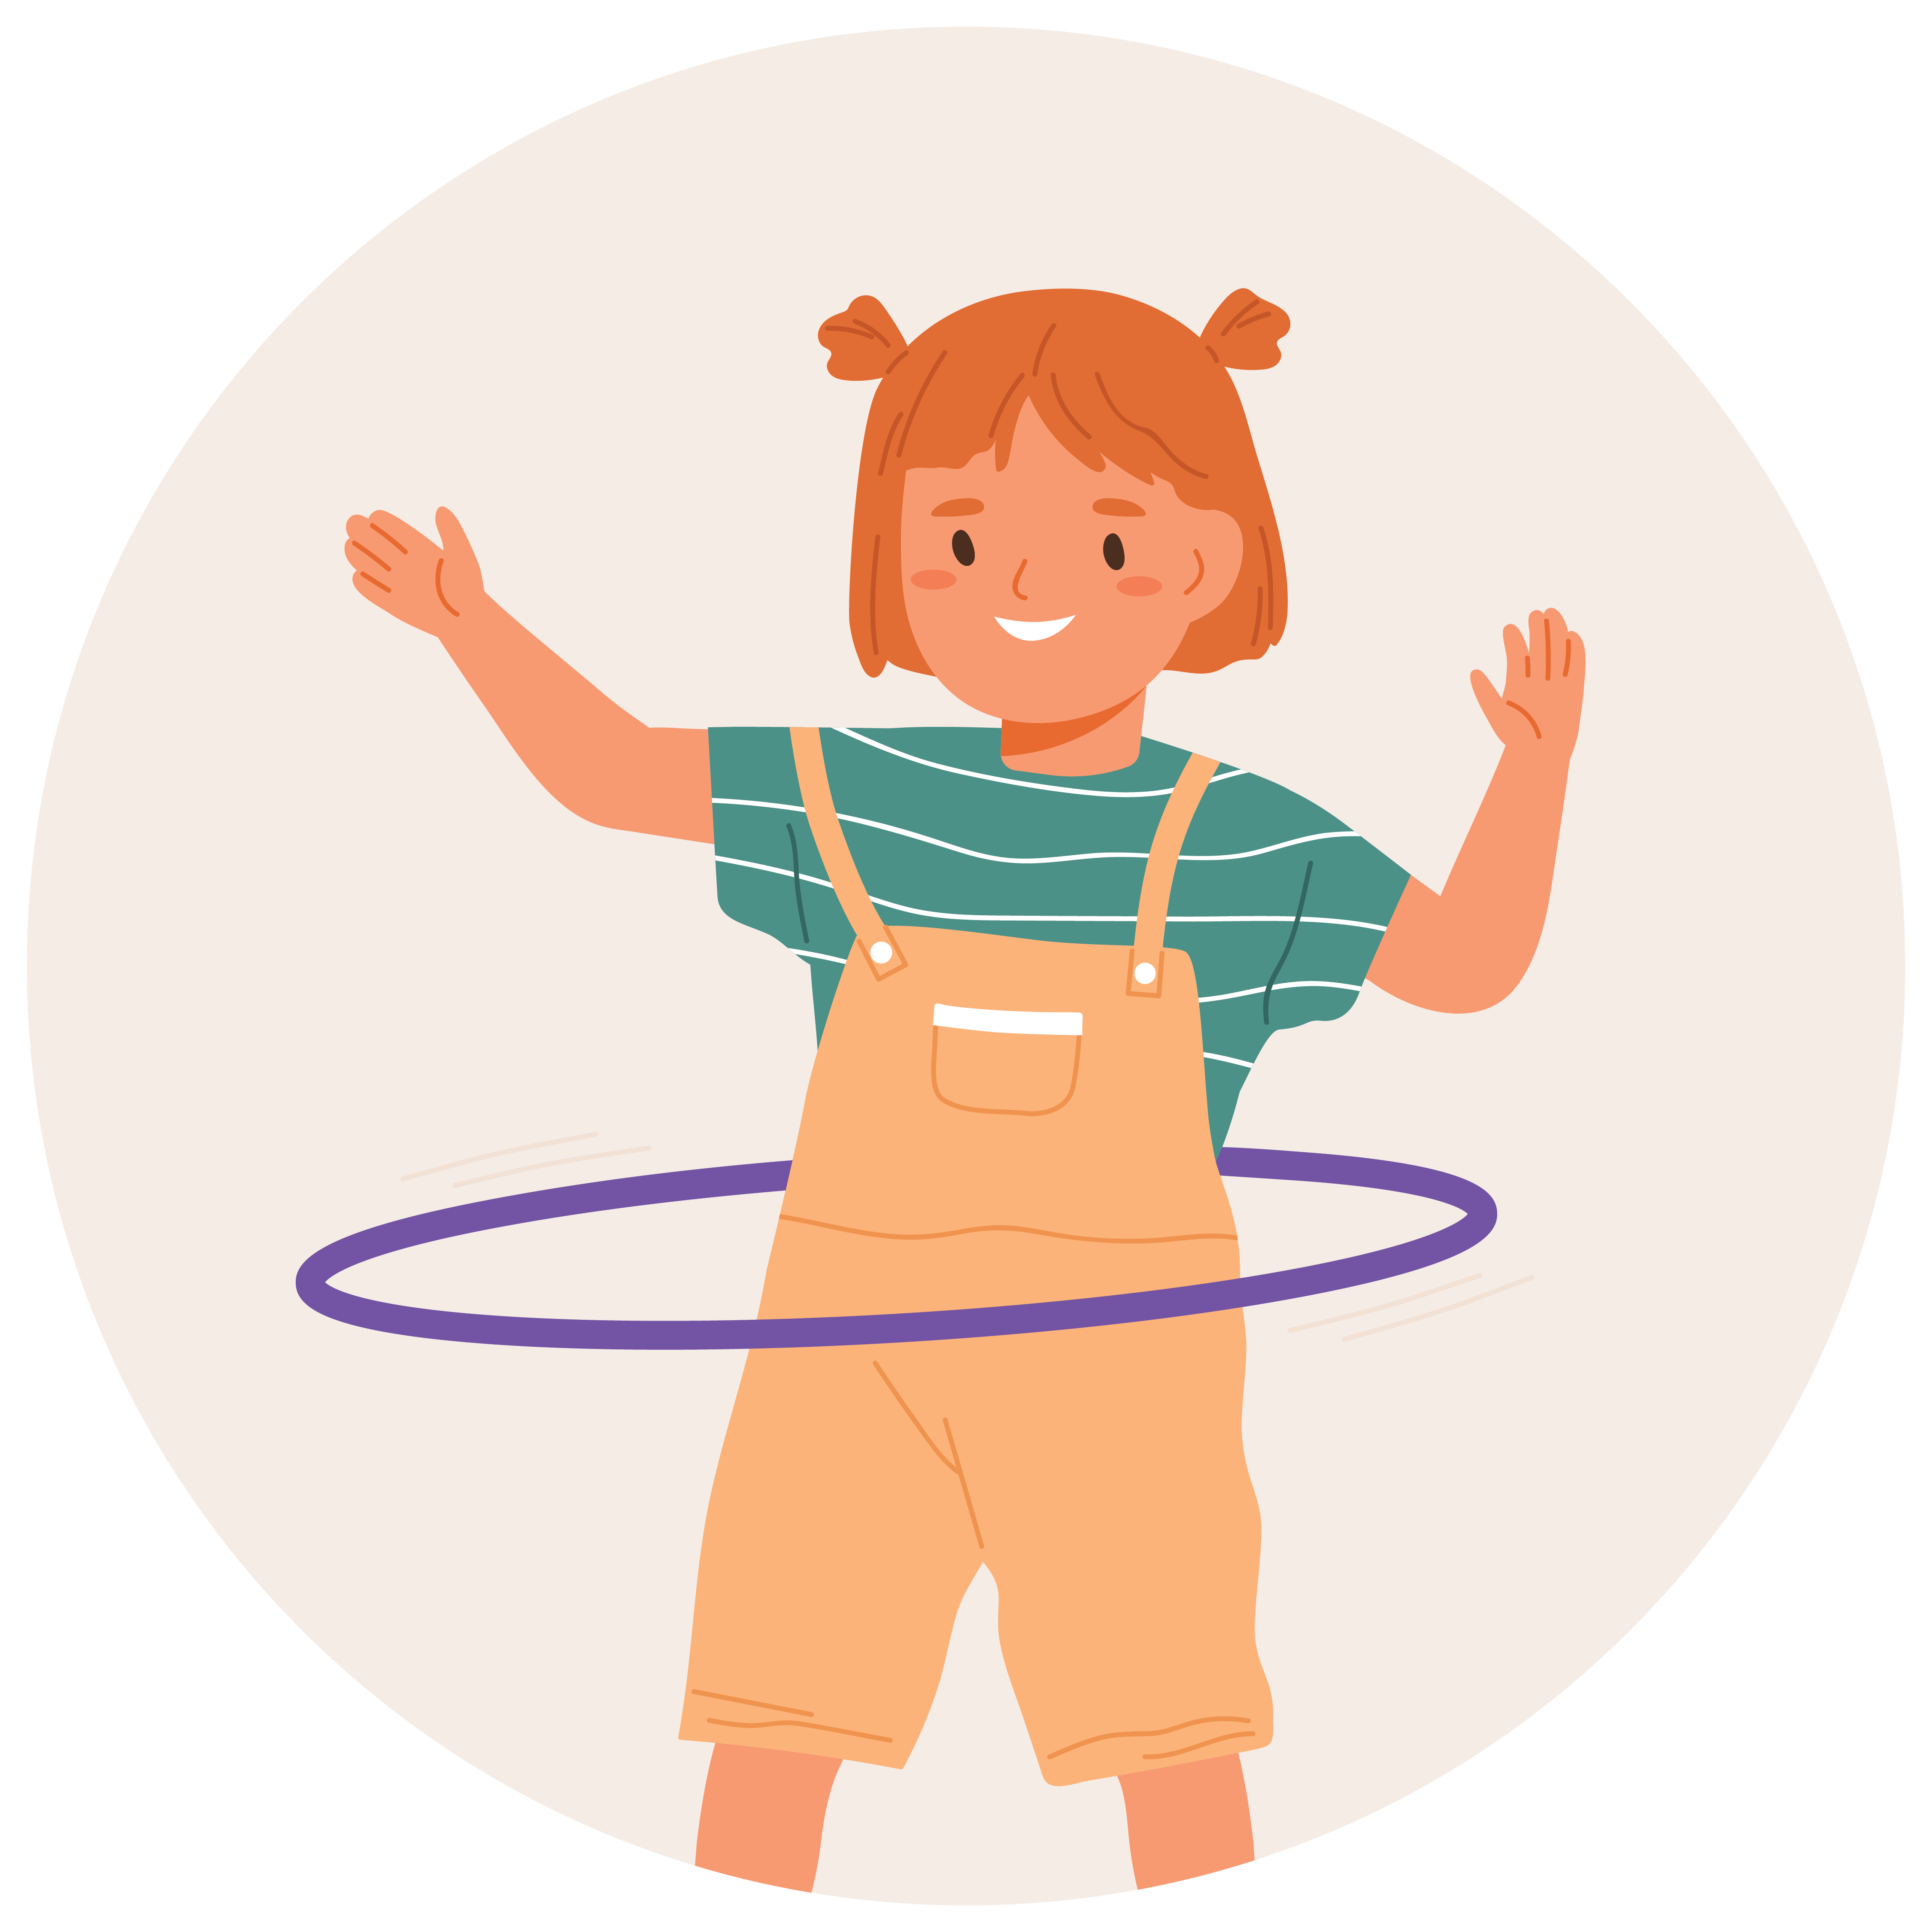 Child with hula-hoop